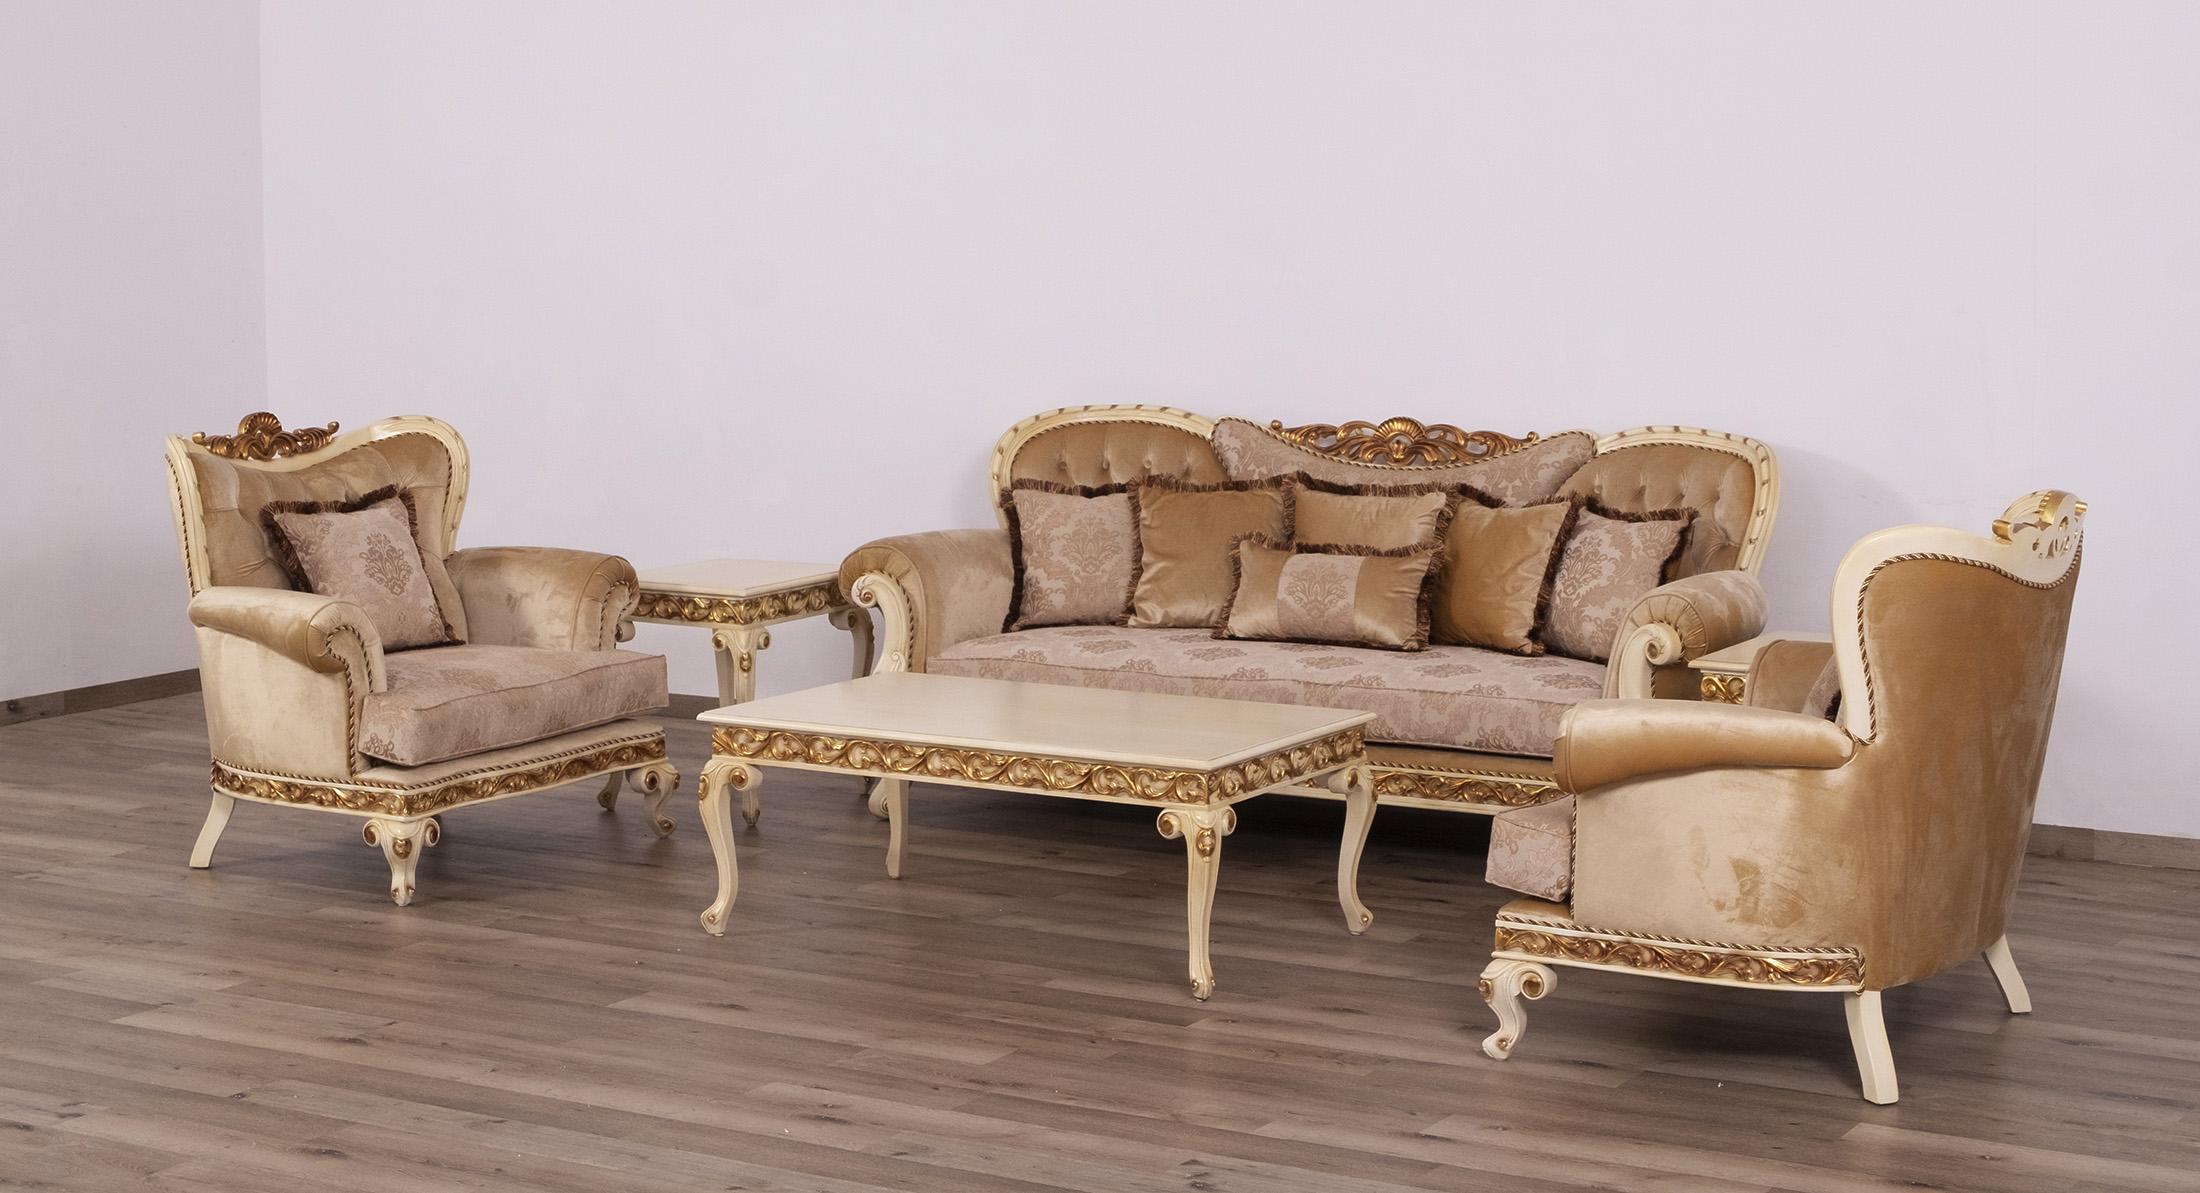 Classic, Traditional Sofa Set FANTASIA 40017-S-Set-3 in Sand, Gold, Beige Fabric